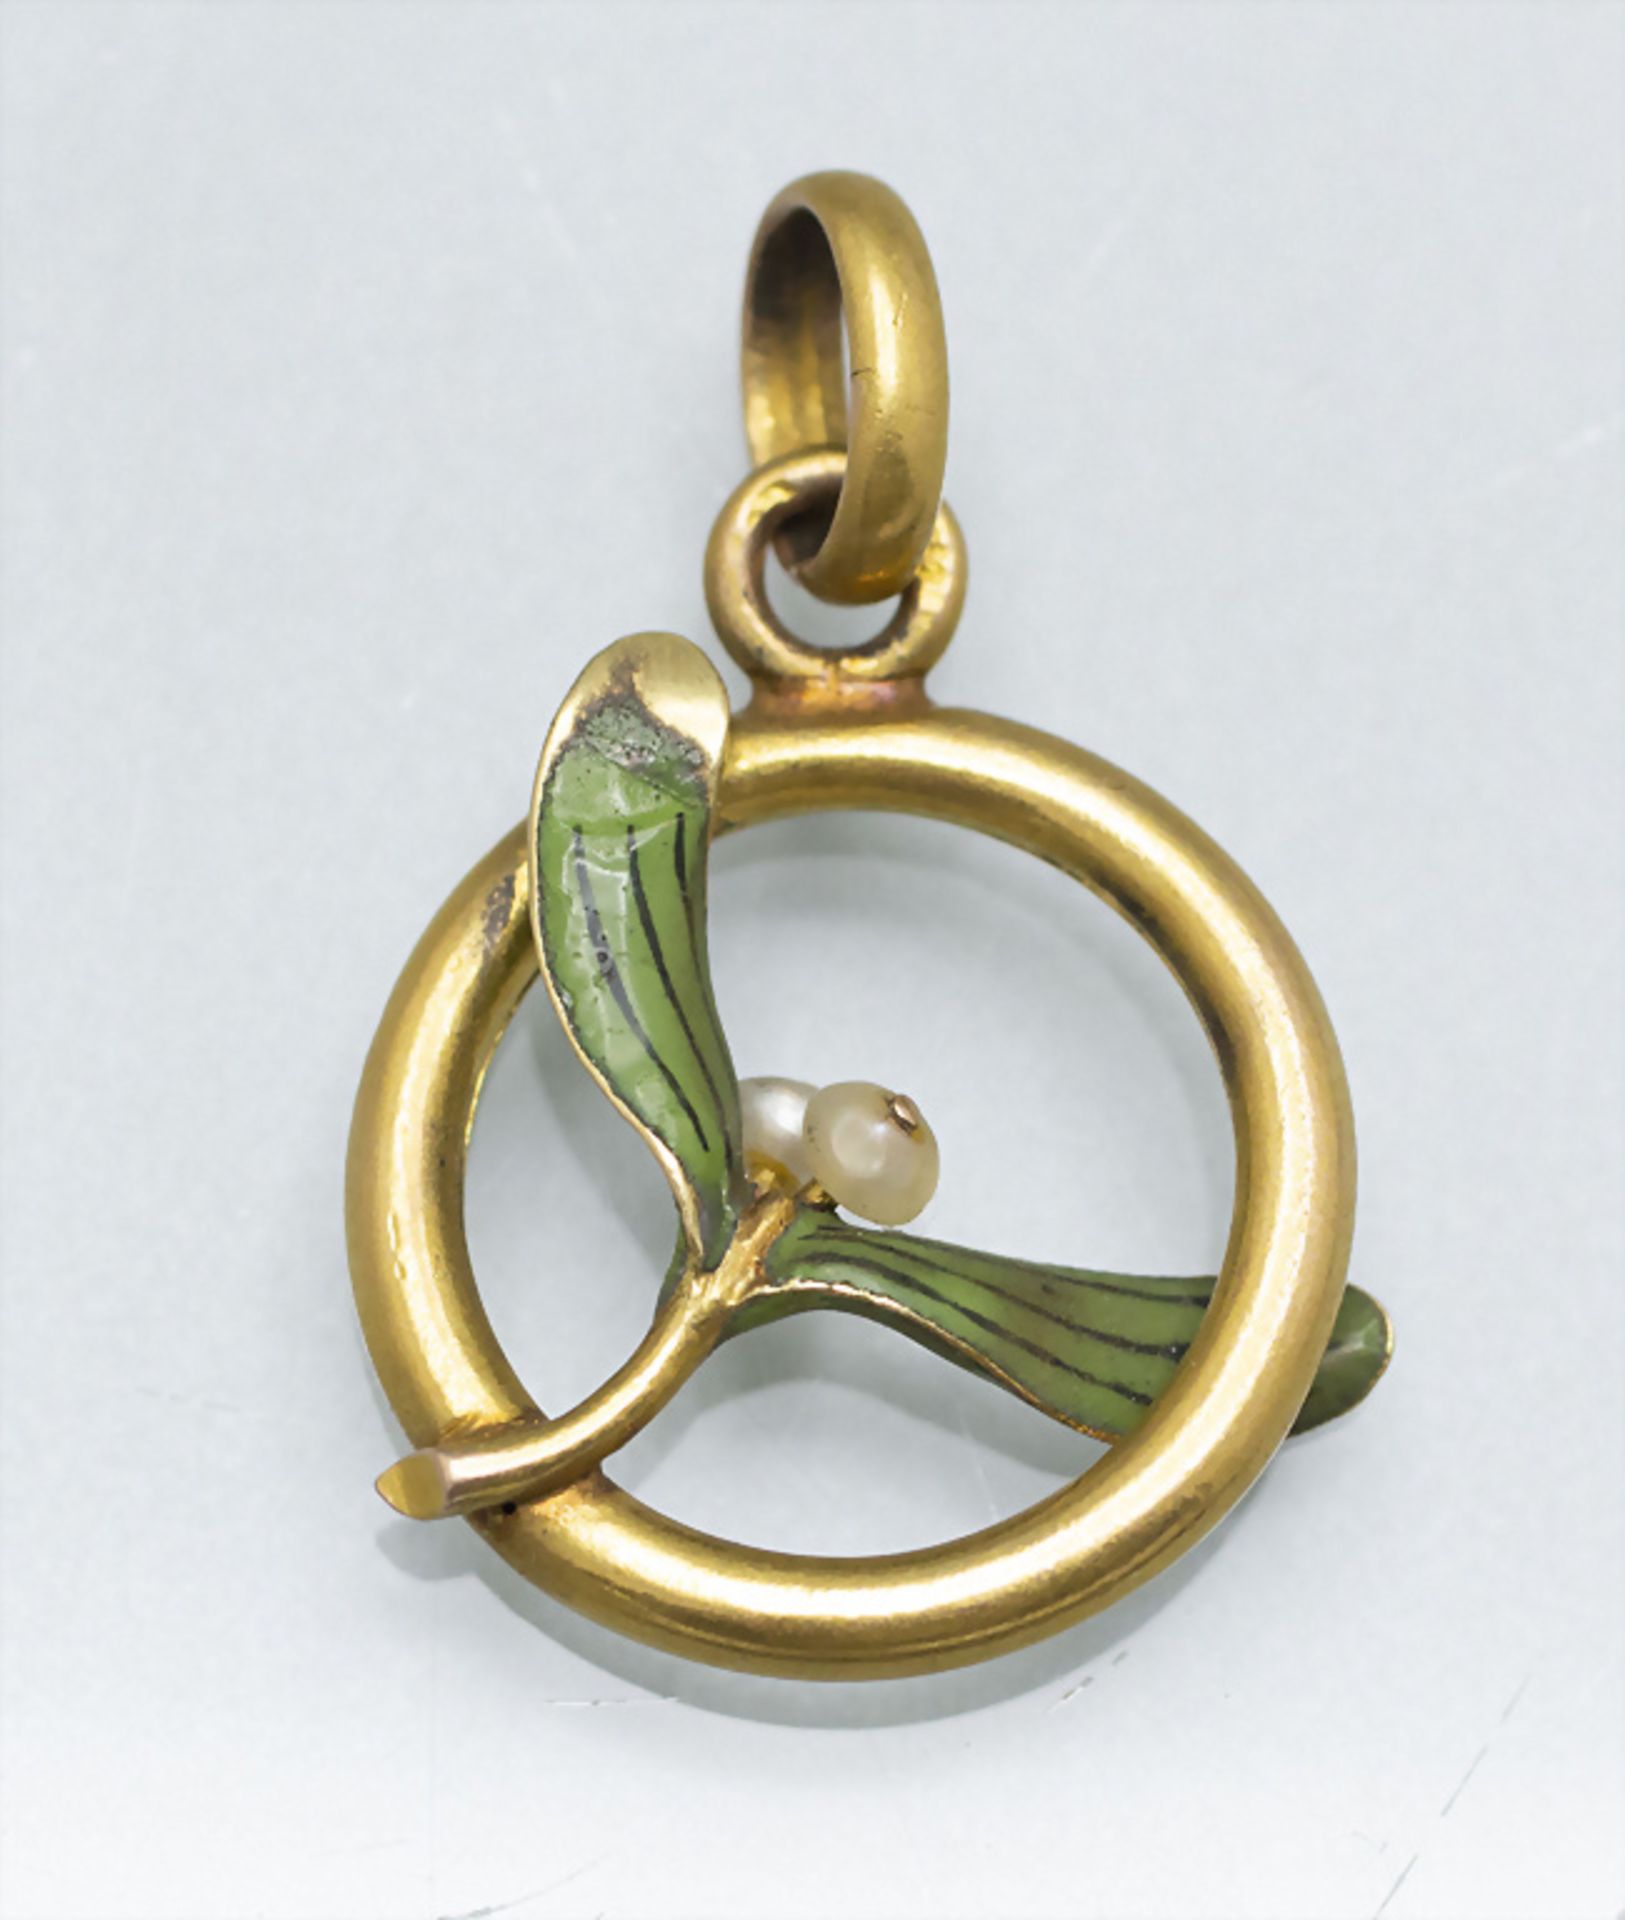 Jugendstil 18 kt Gold Anhänger mit Mistelzweig / An Art Nouveau 18 ct gold pendant with ...